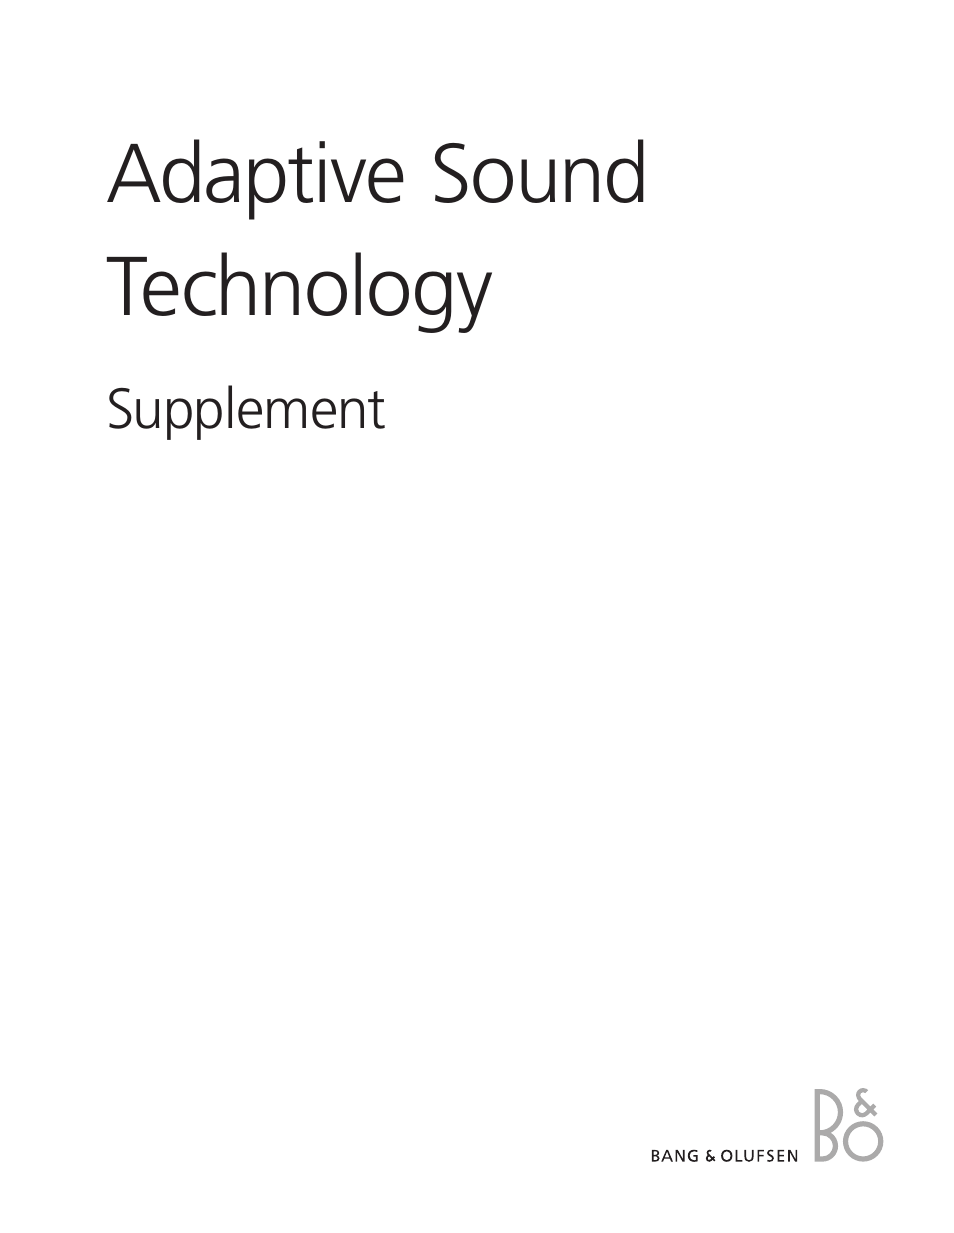 Adaptive Sound Technology - User Guide